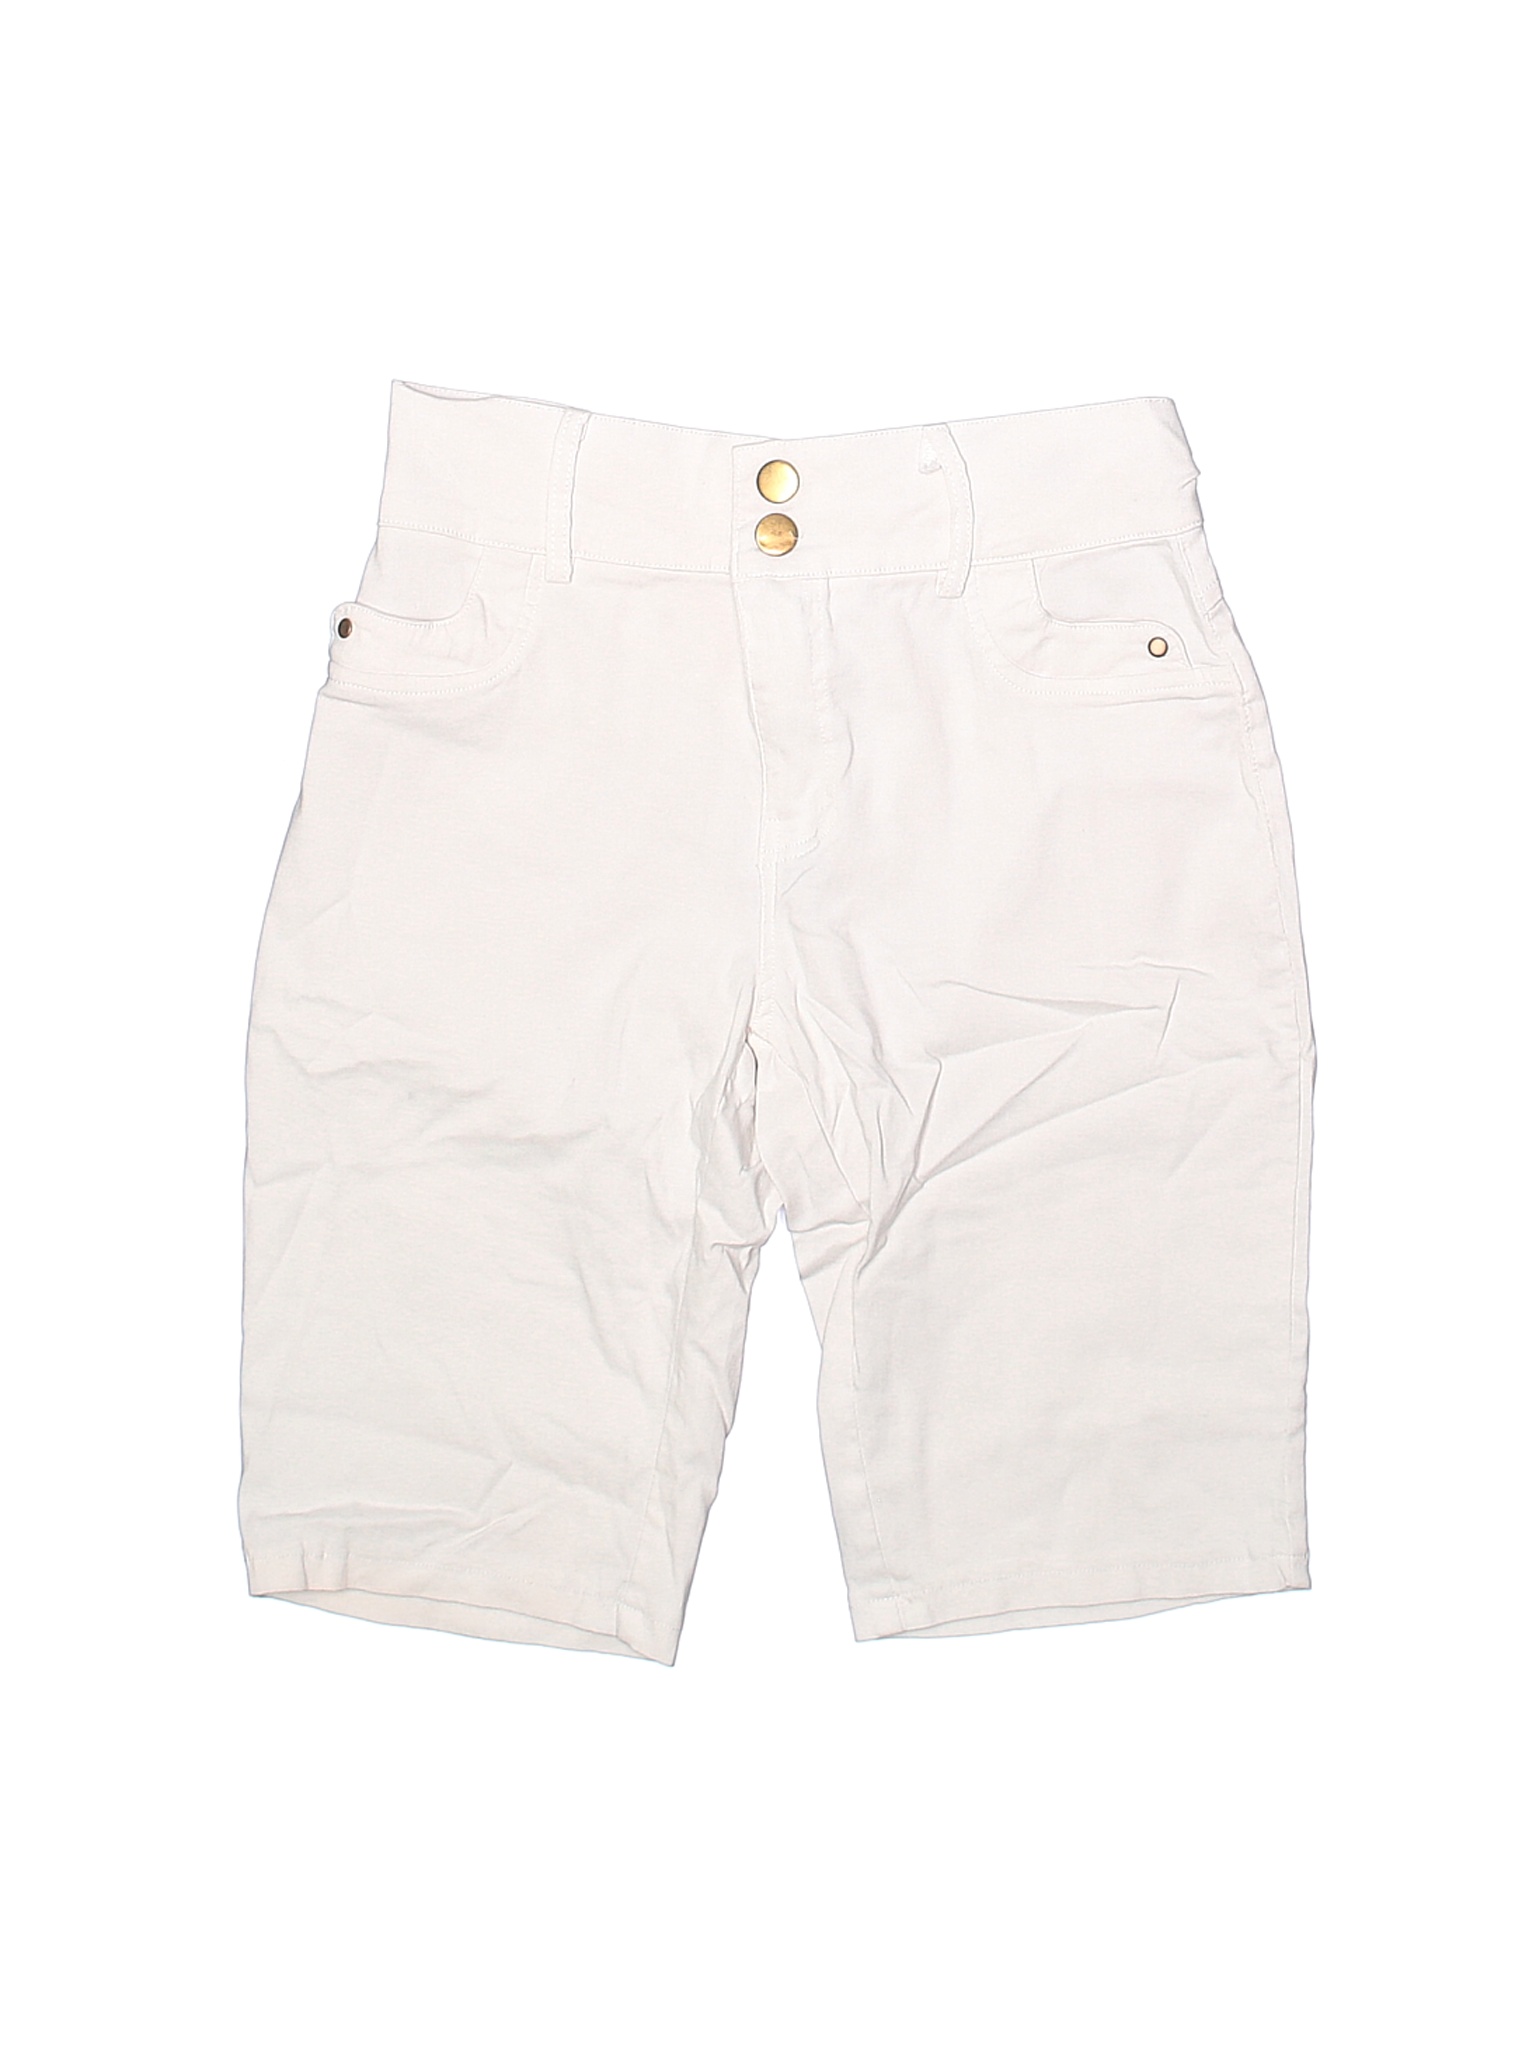 Unbranded Women White Shorts S | eBay